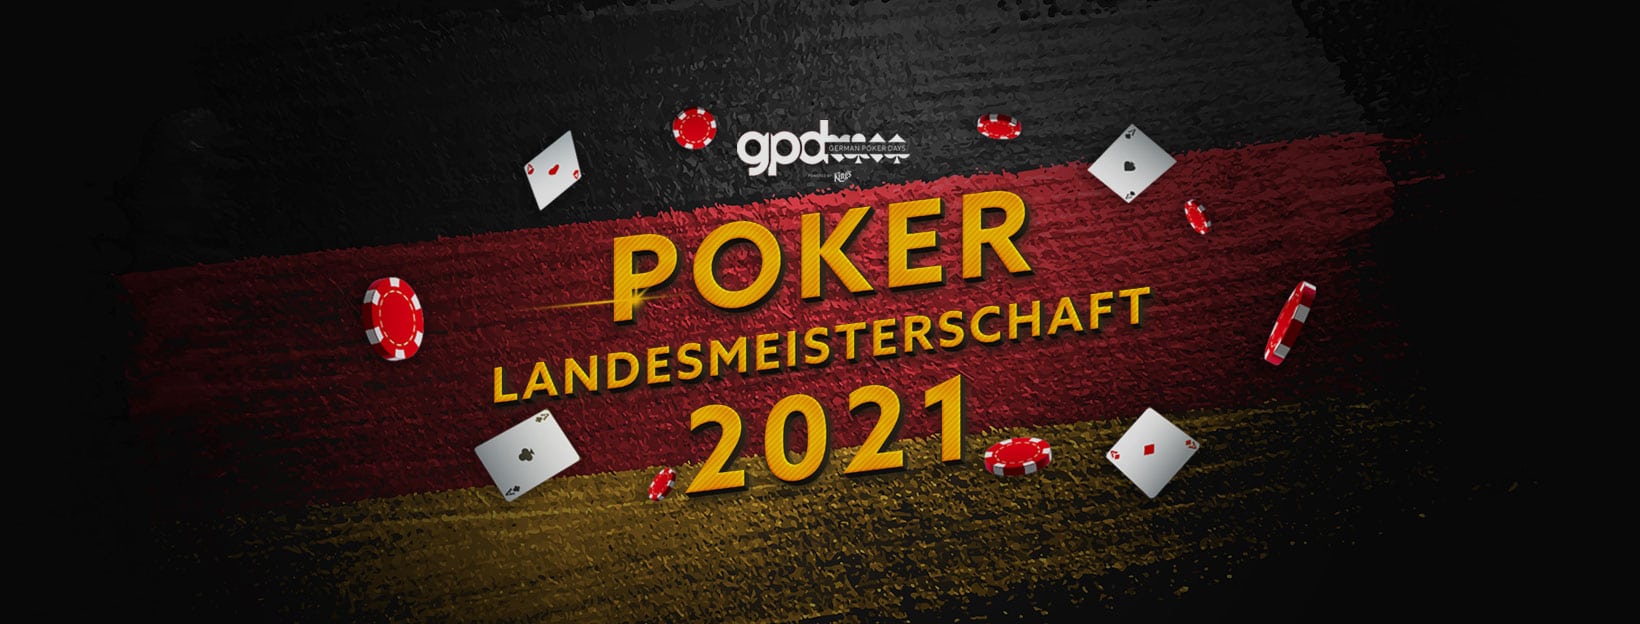 Poker Landesmeisterschaft 2021 Bayern